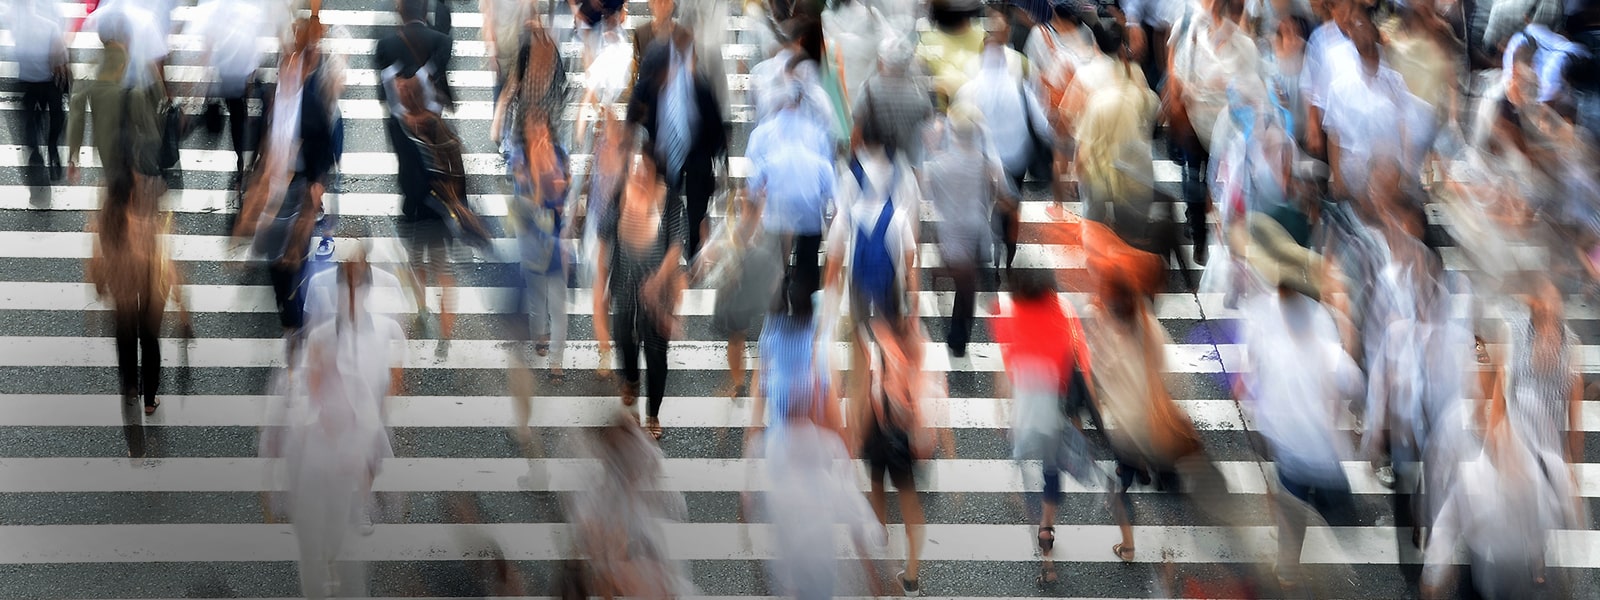 Blurred people using road crossing